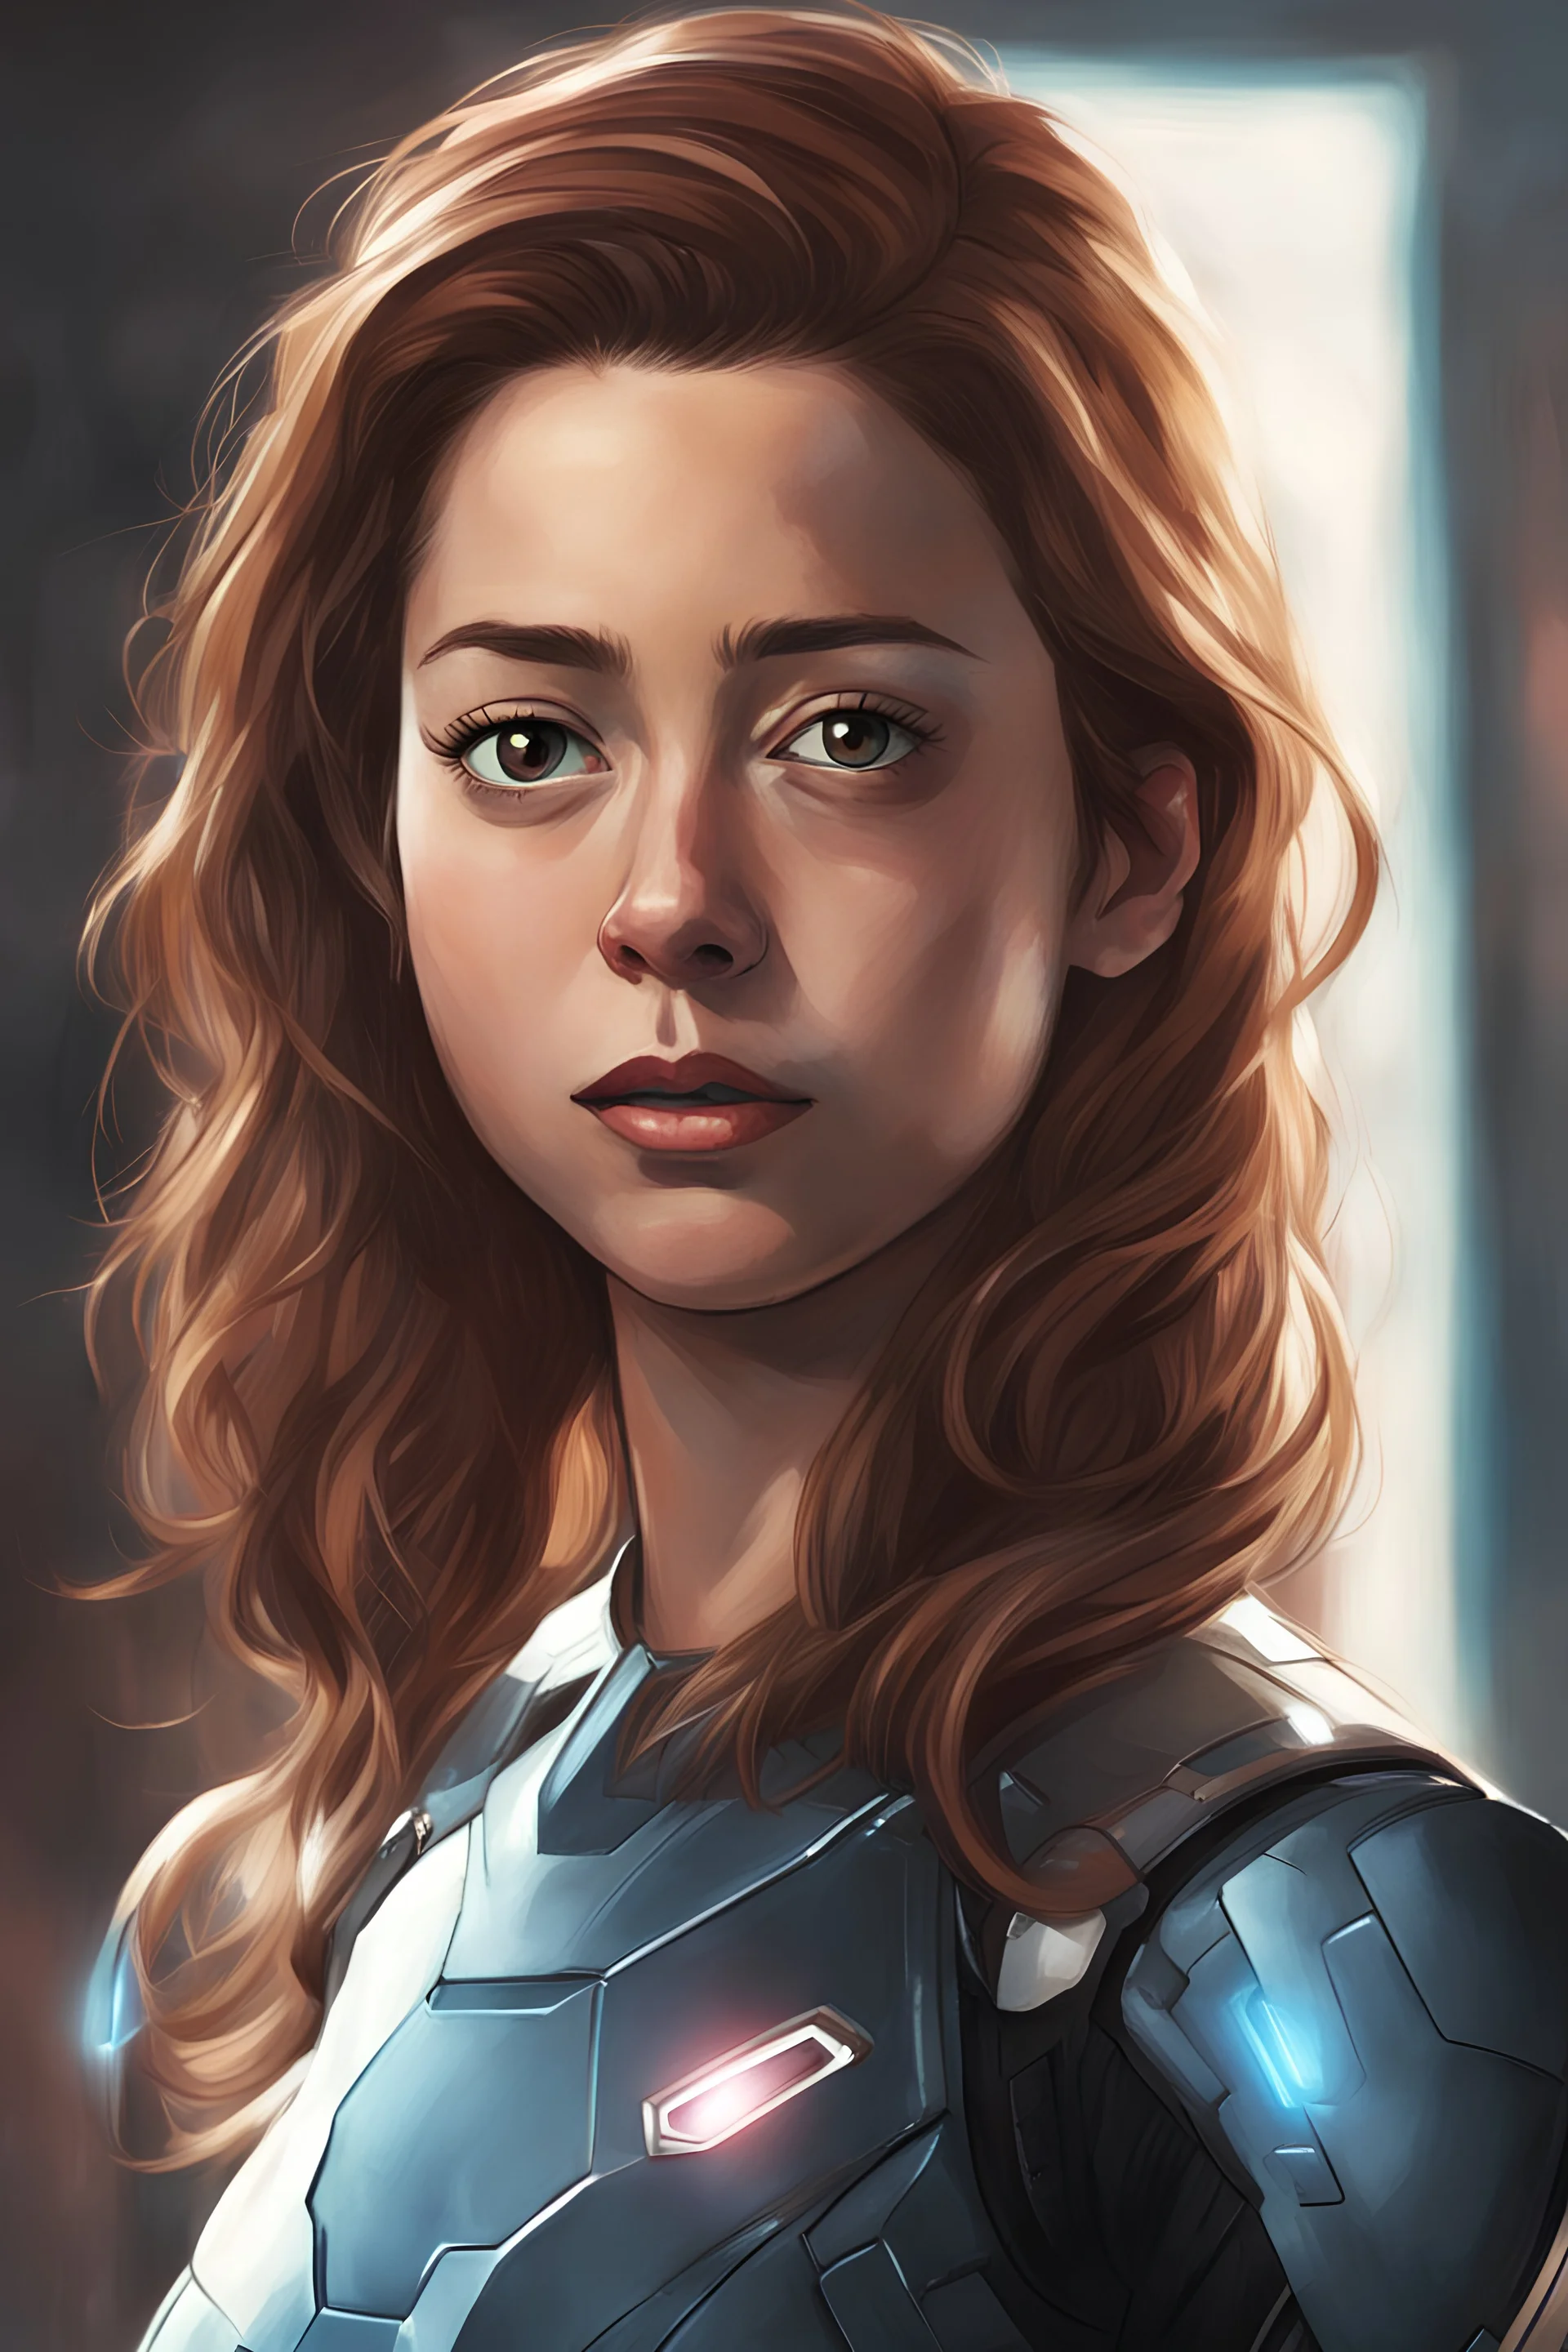 A teenage, girl version of tony stark